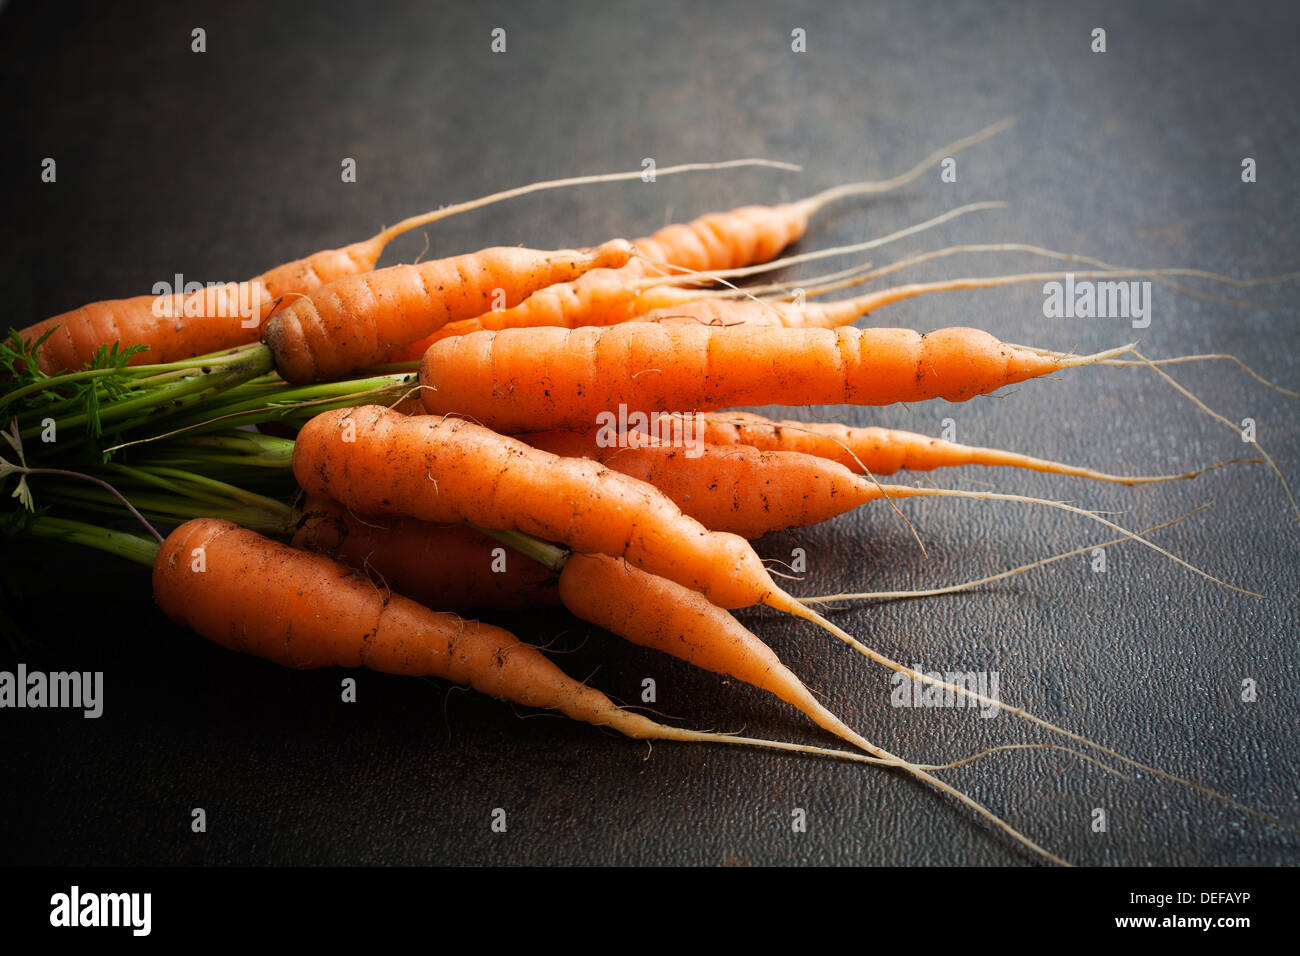 Bunch of fresh carrots on dark background Stock Photo